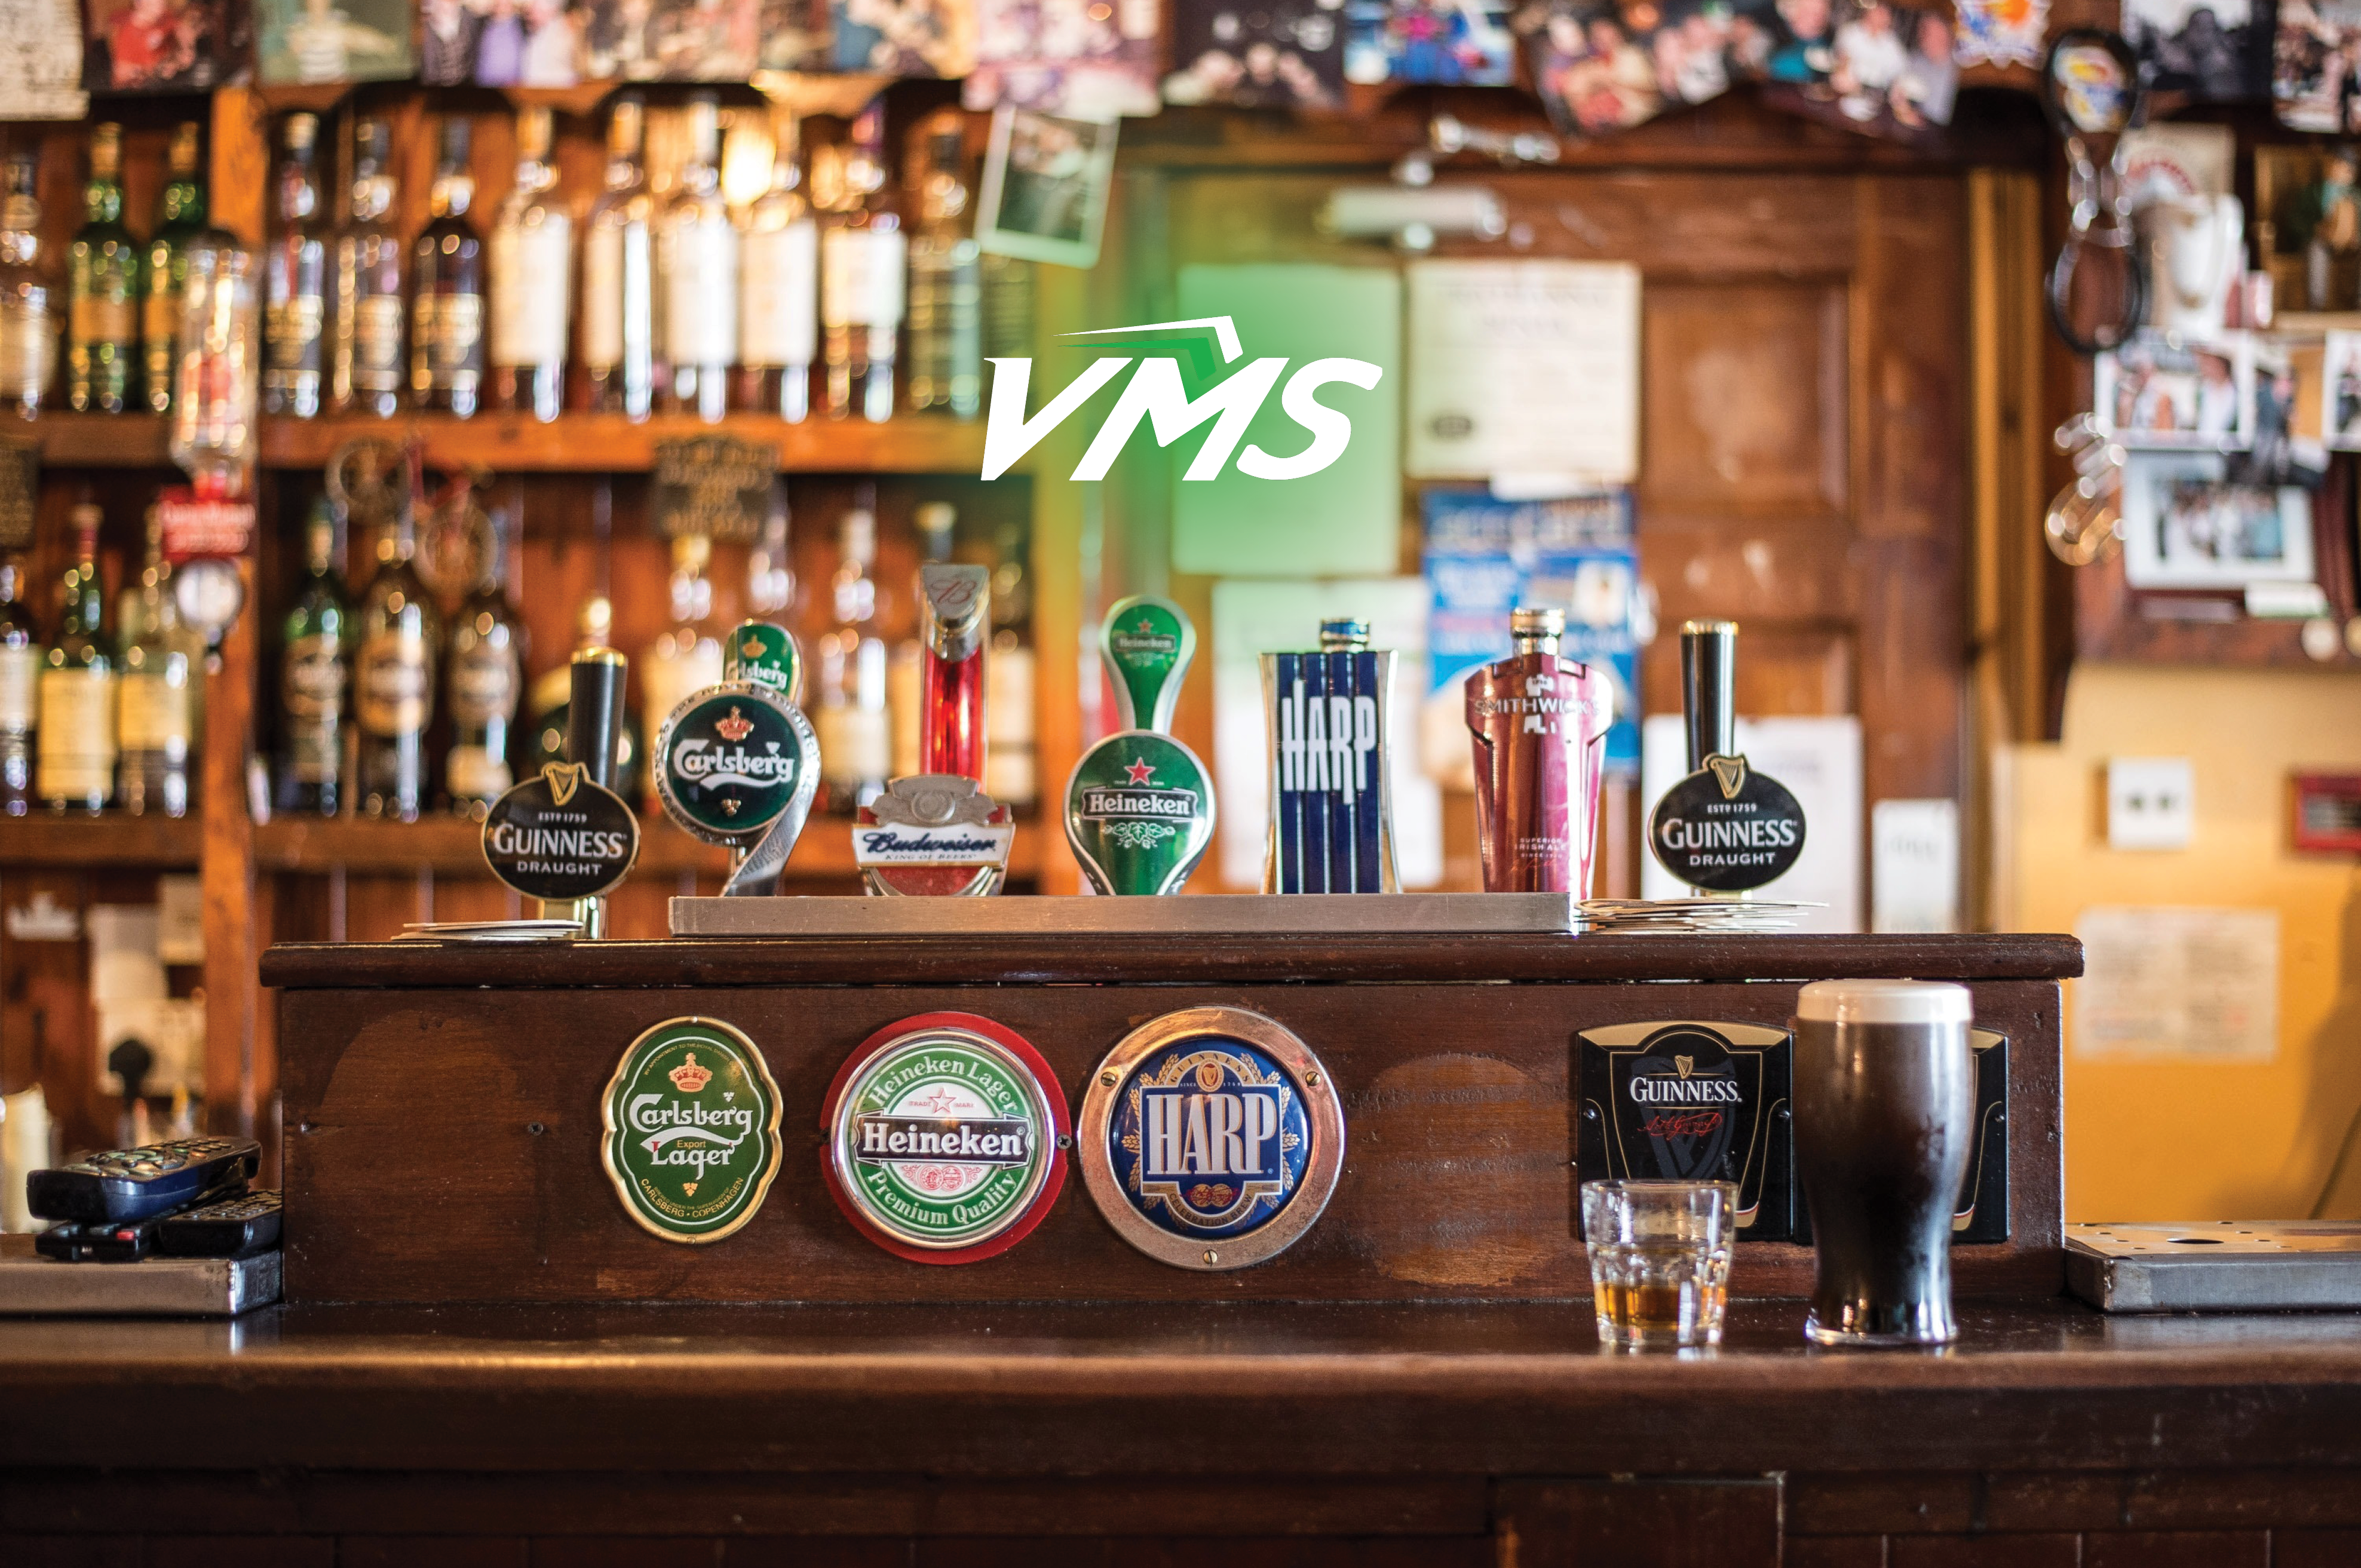 bar with VMS logo